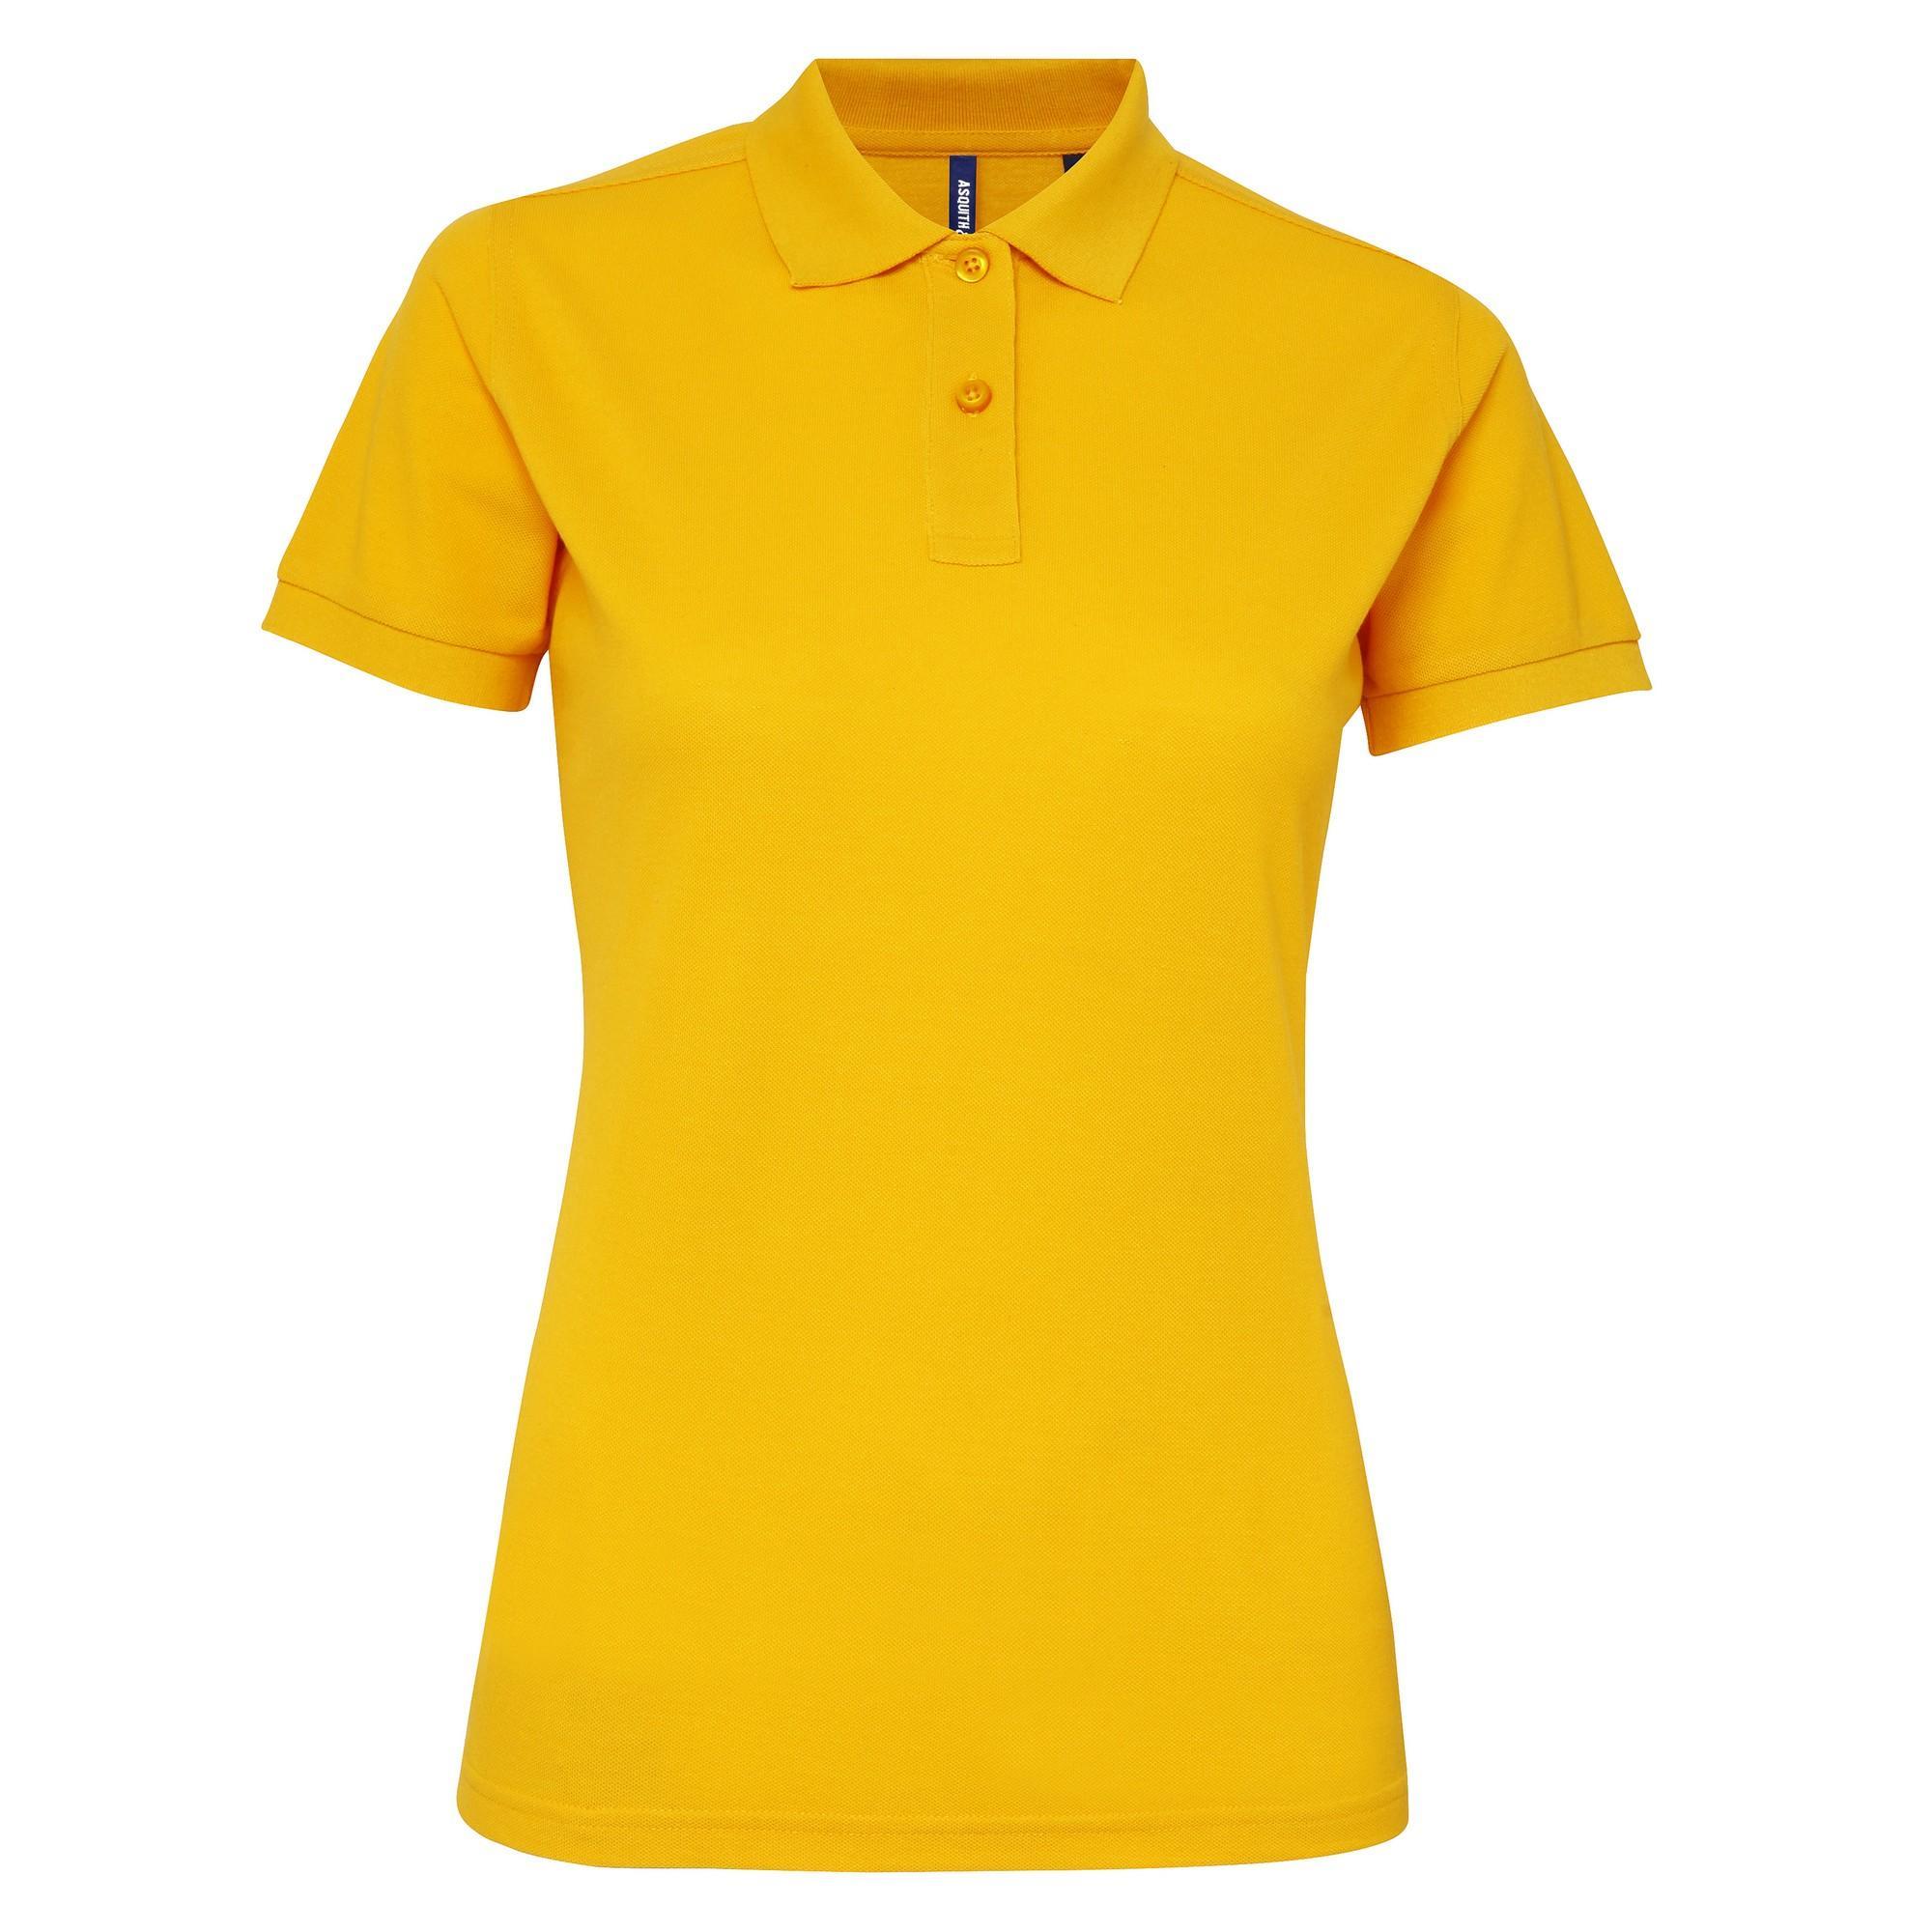 Asquith & Fox Womens/Ladies Short Sleeve Performance Blend Polo Shirt (Sunflower) (XS)